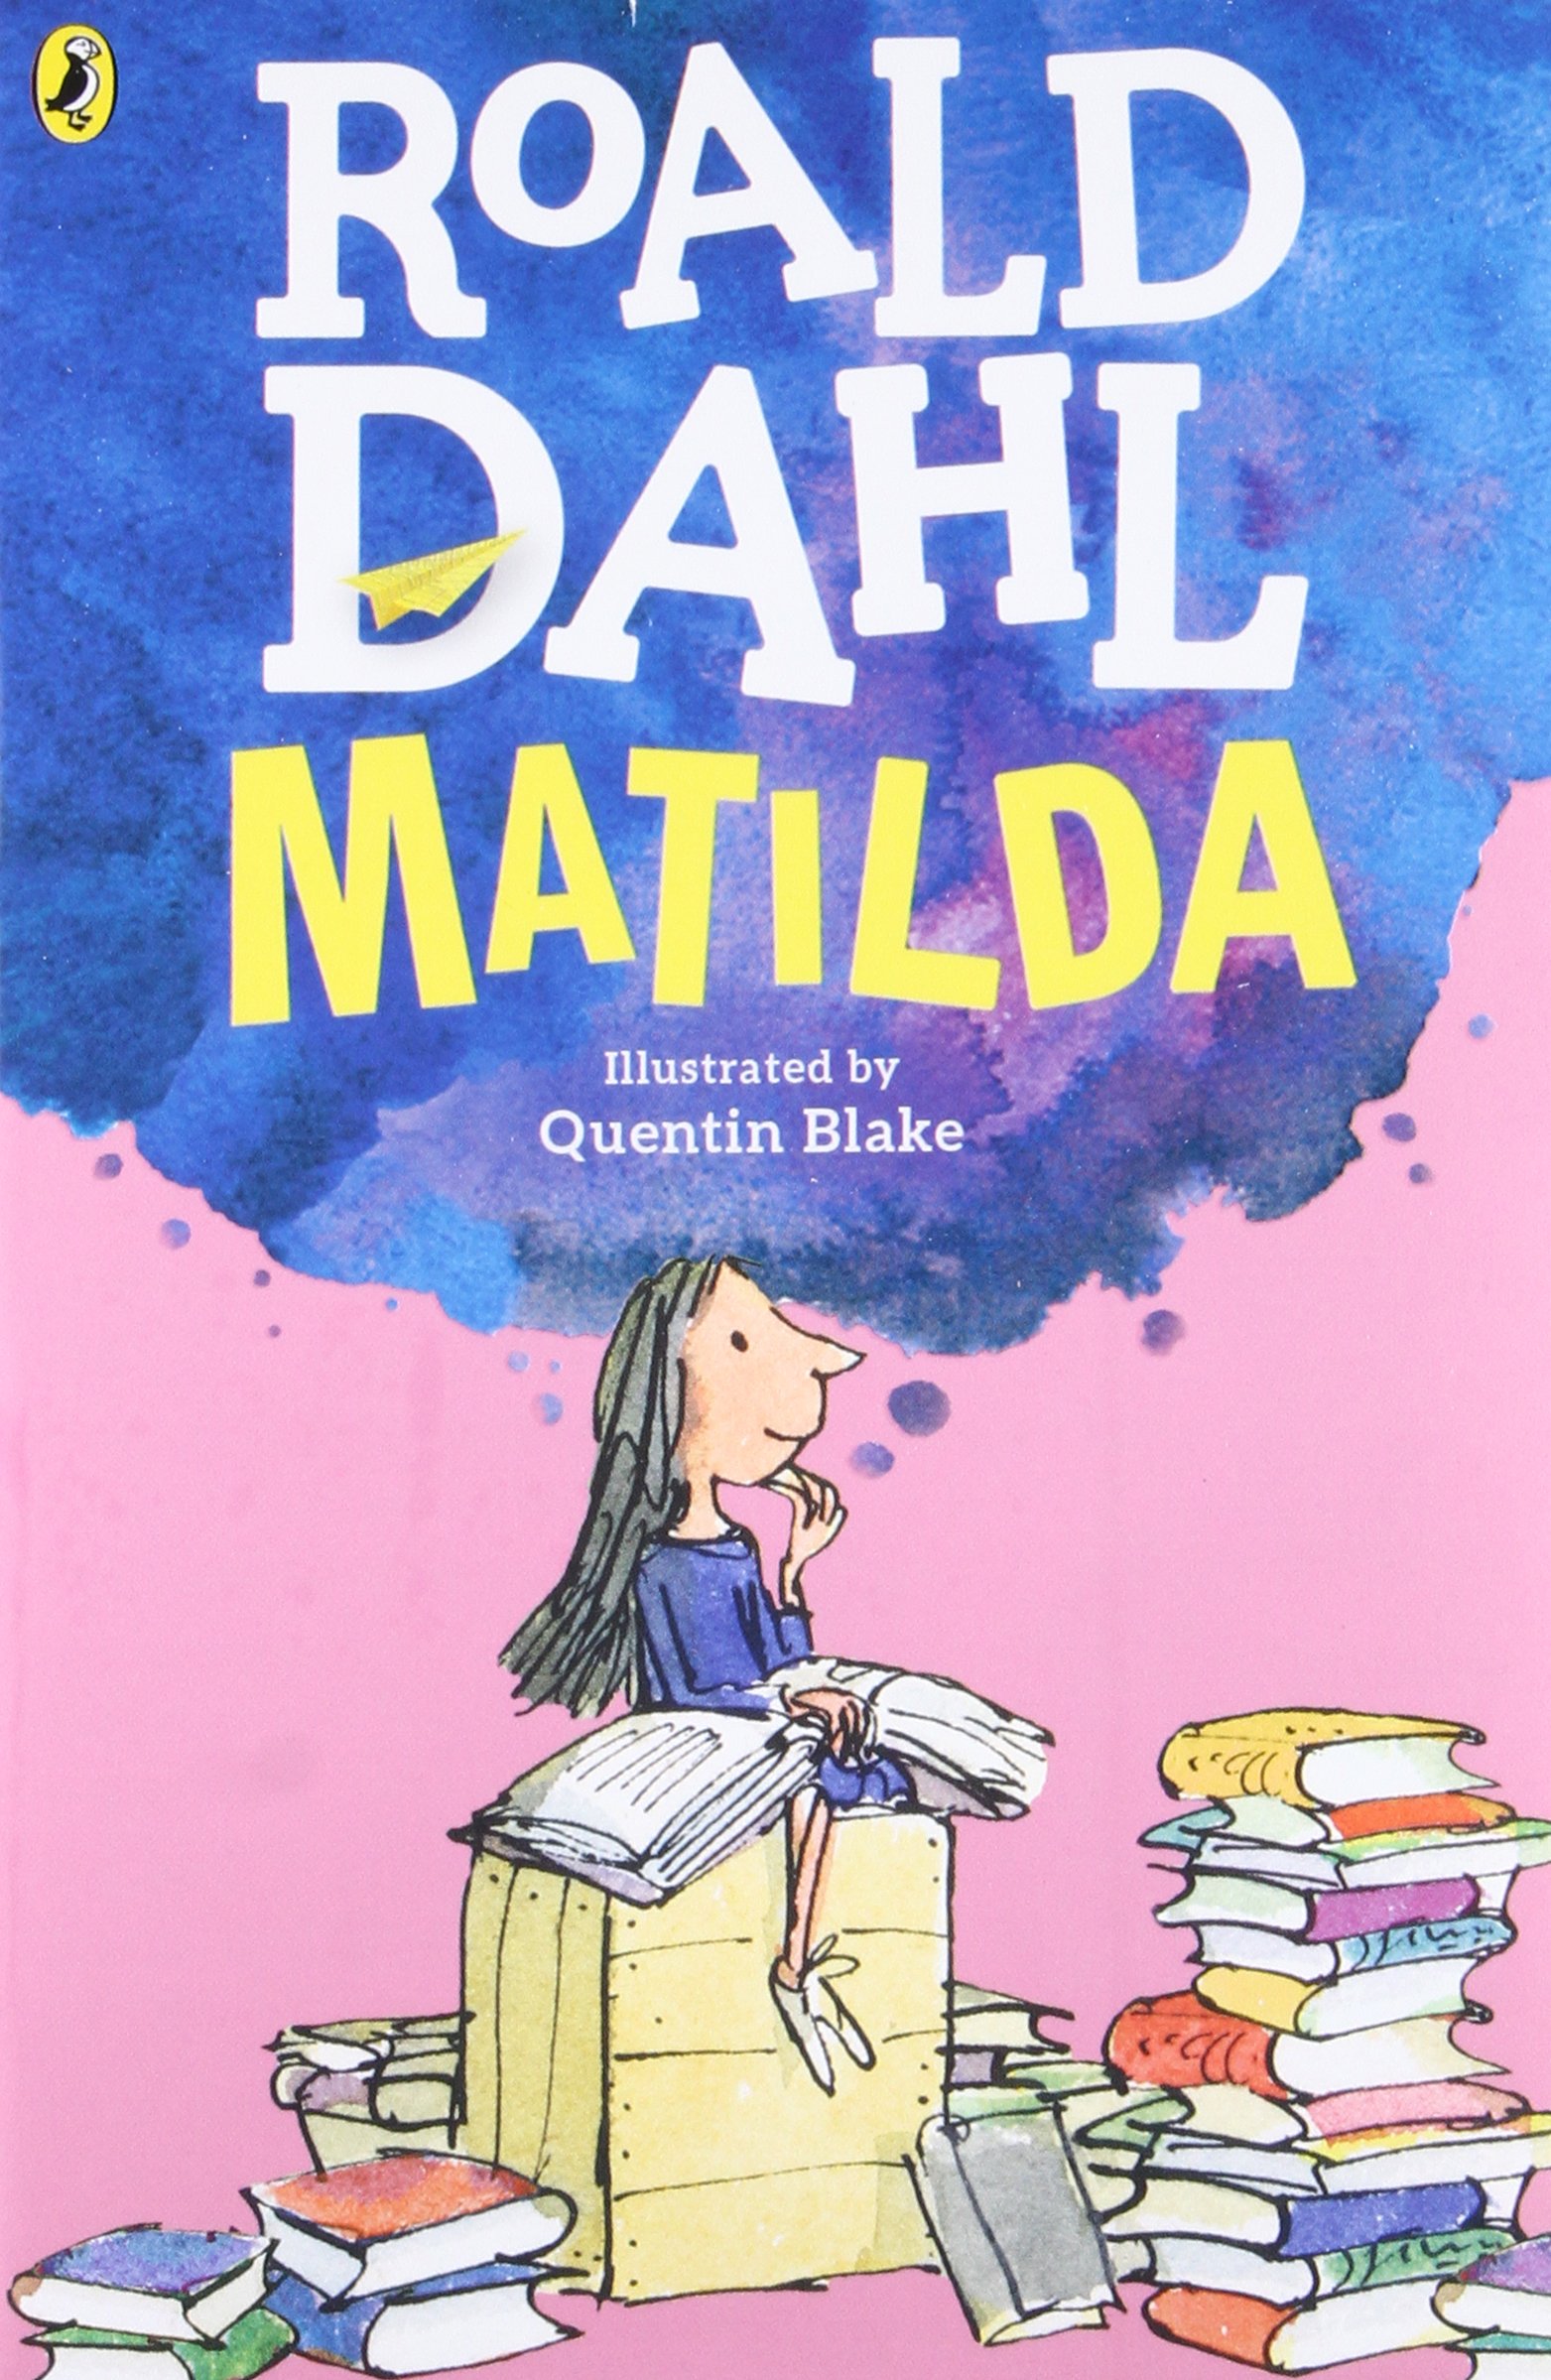 Matilda dahl. Dahl Roald "Matilda".